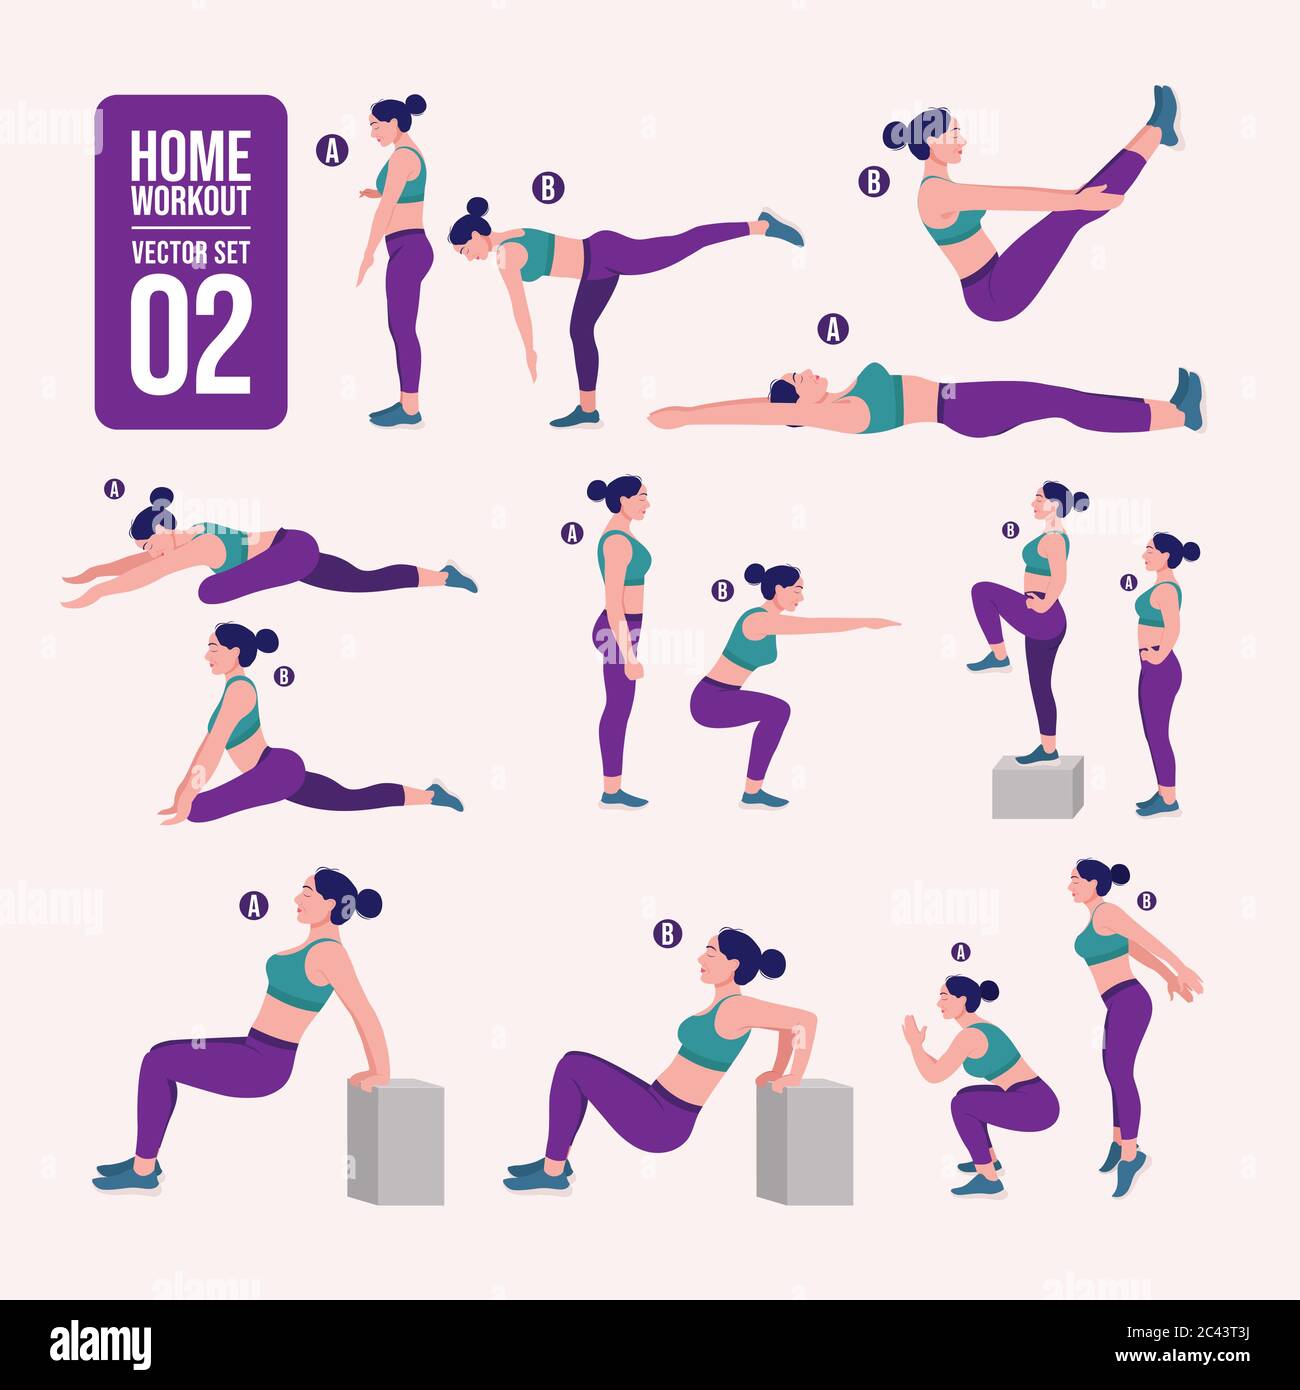 Home Workout girl set. Woman doing fitness and yoga exercises